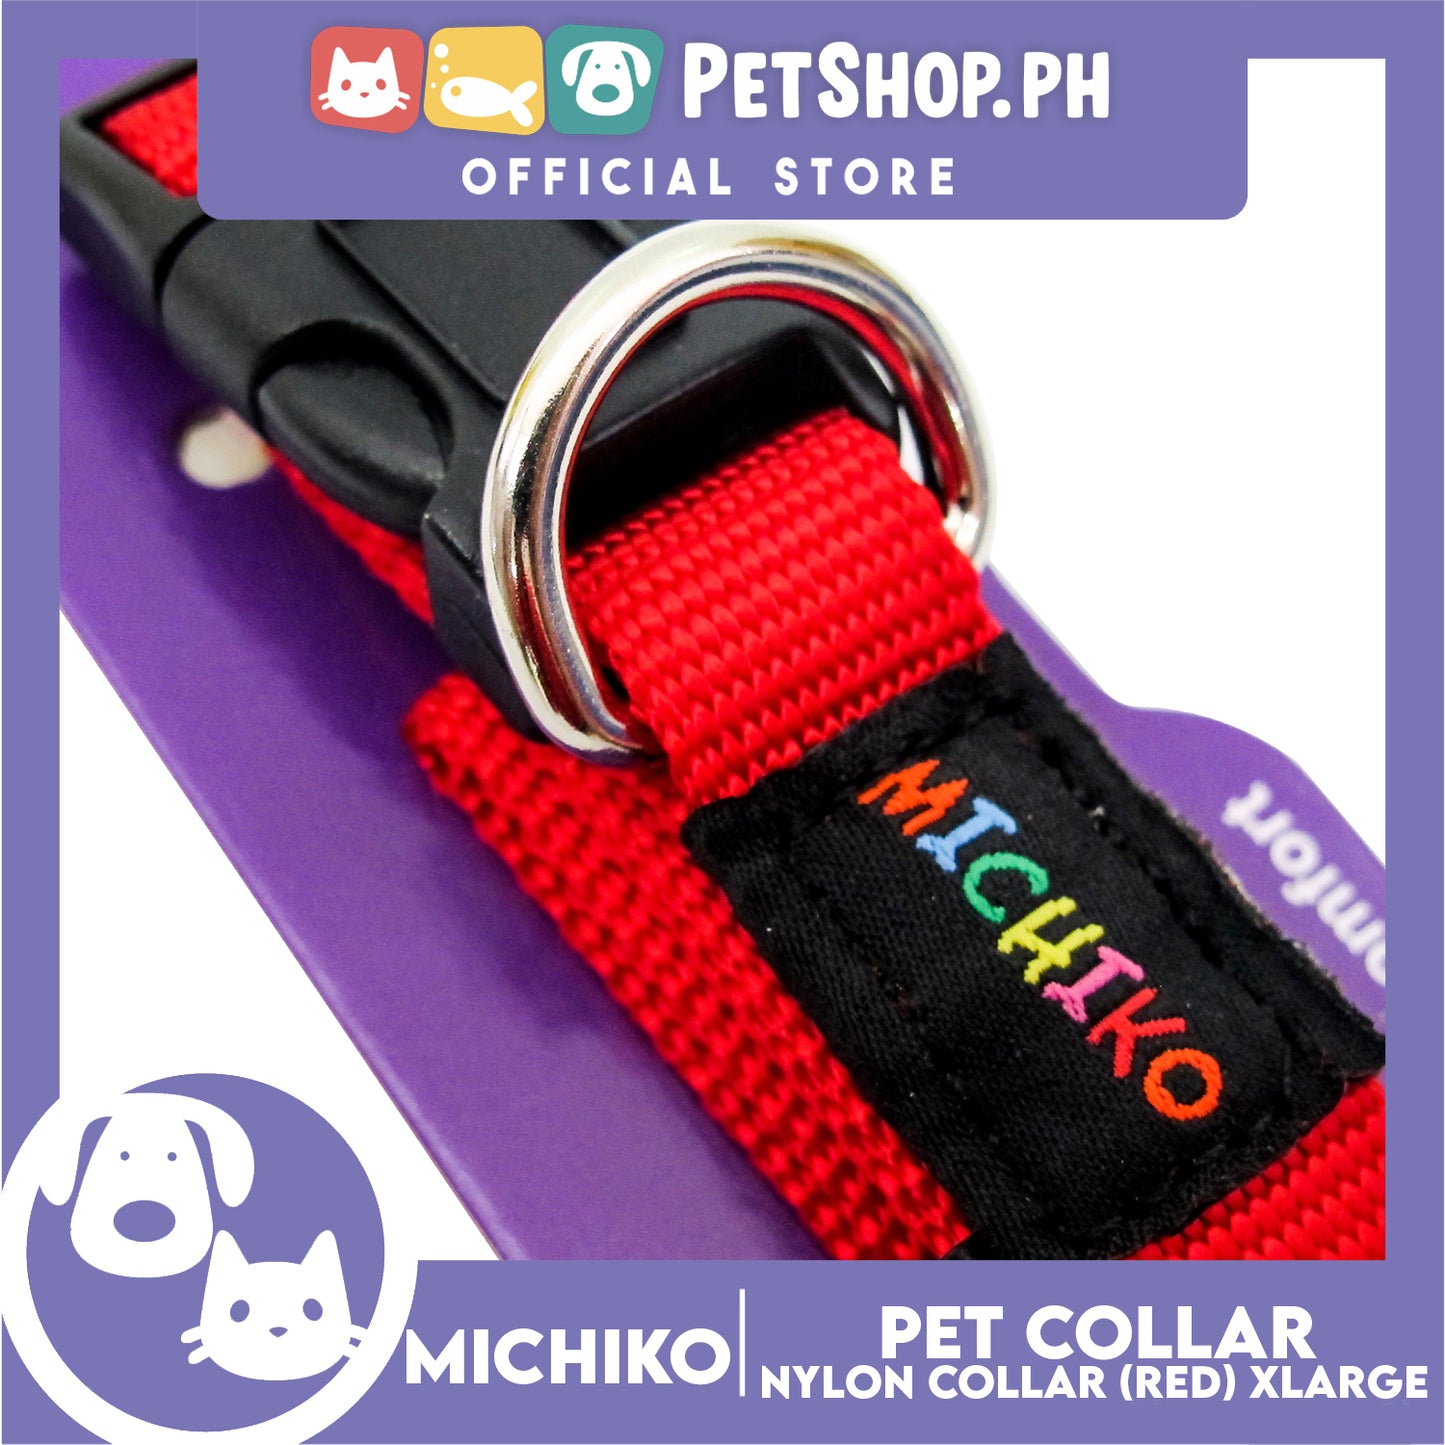 Michiko Nylon Collar Red (Extra Large) Pet Collar